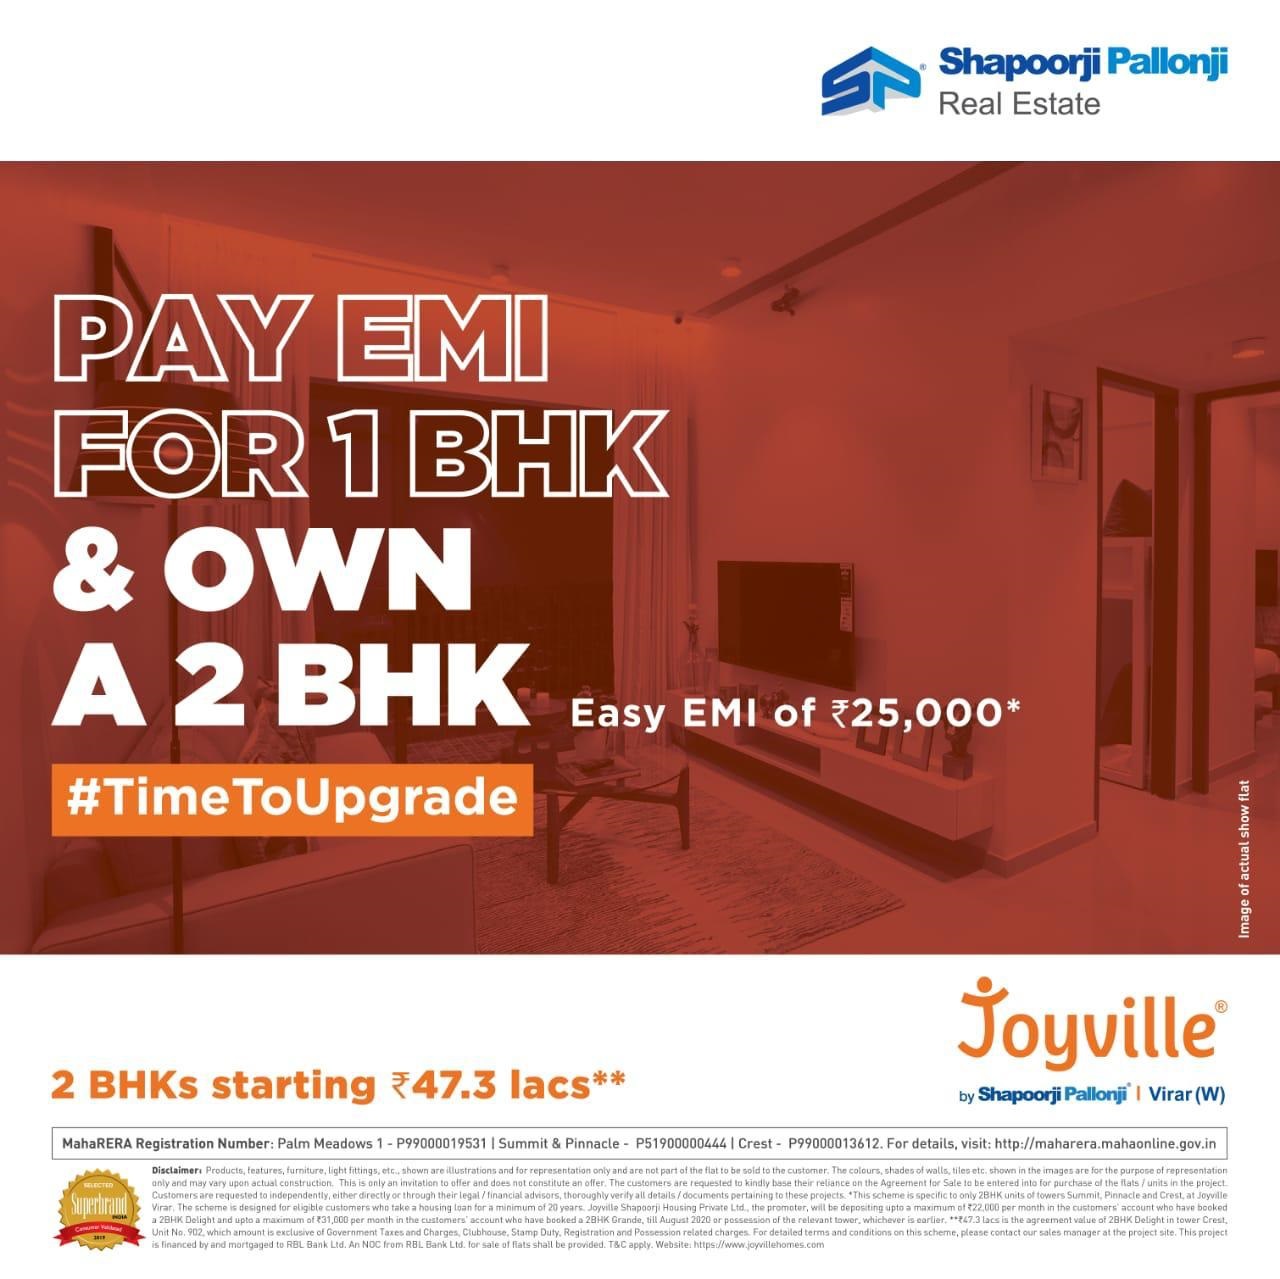 Pay EMI for 1 BHK and own a 2 BHK at Shapoorji Pallonji Joyville in Virar, Mumbai